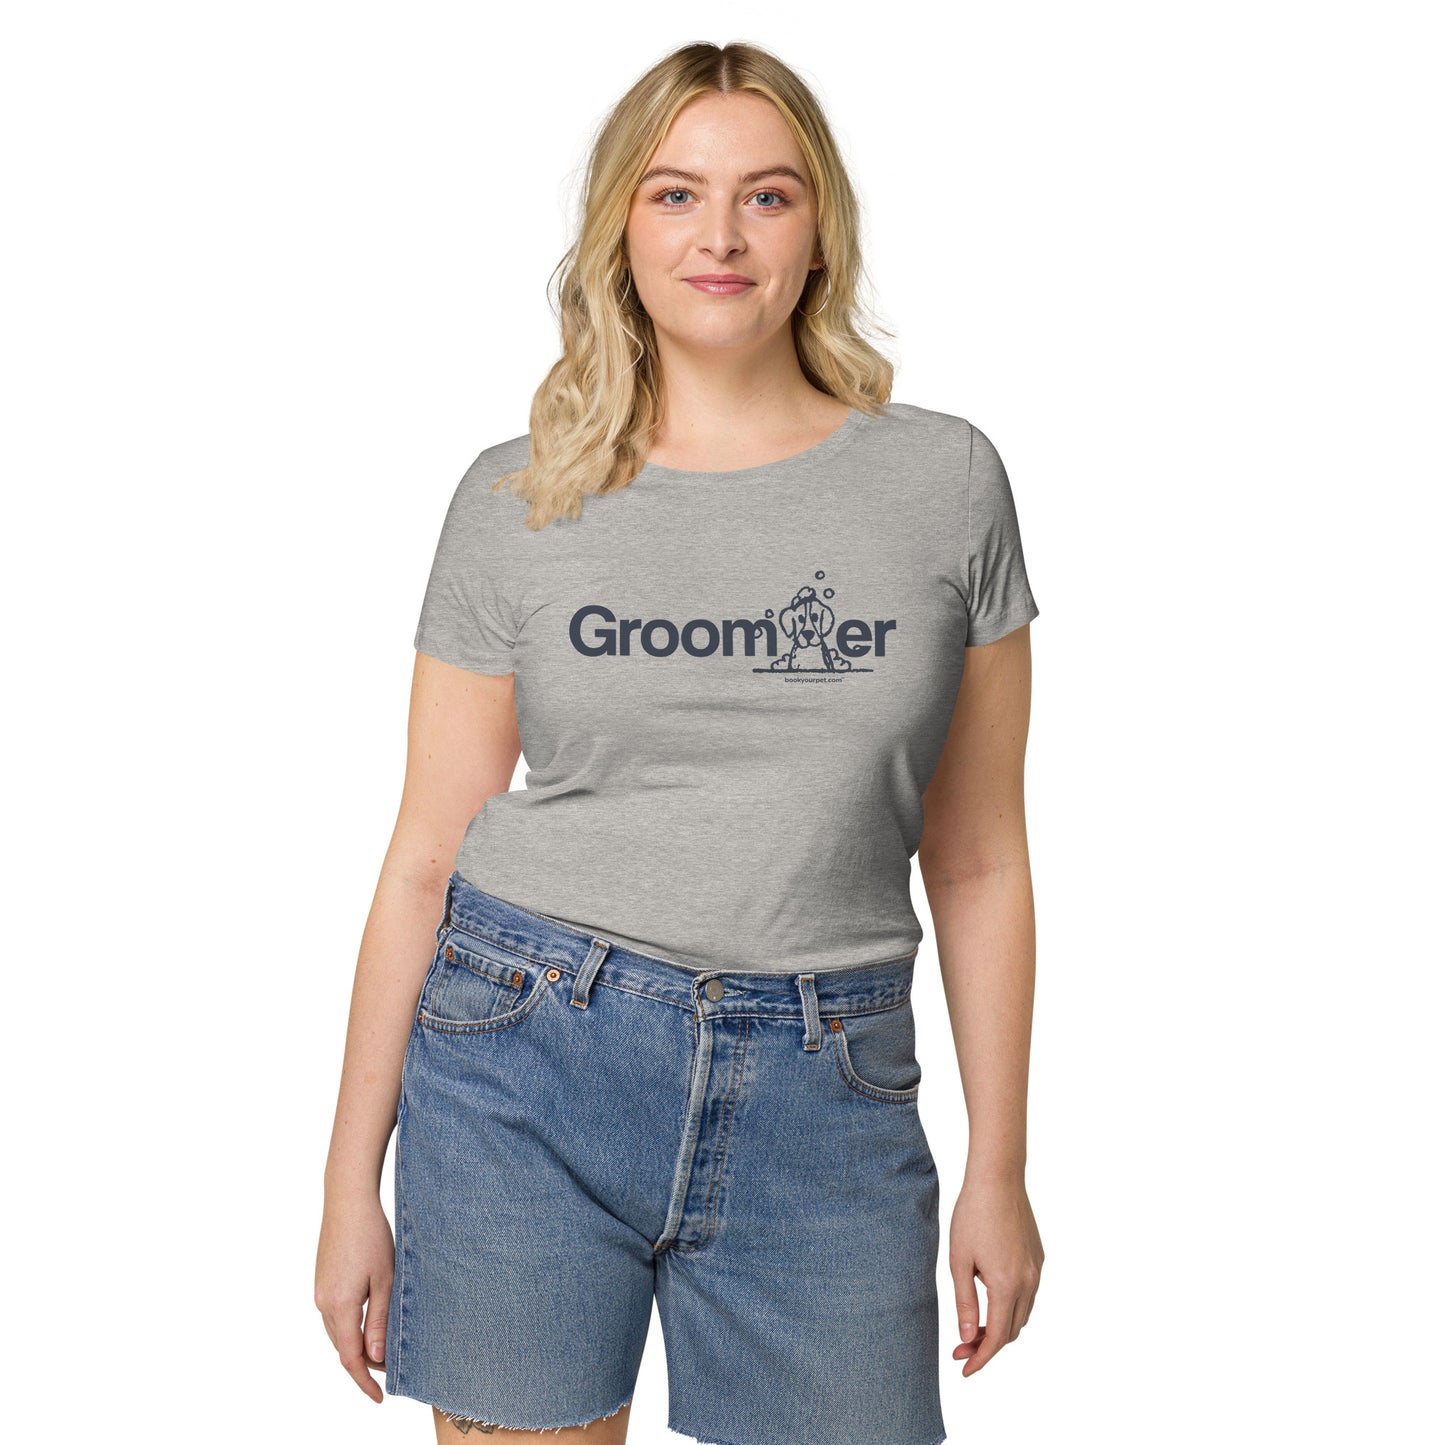 Women’s basic Groomer organic t-shirt